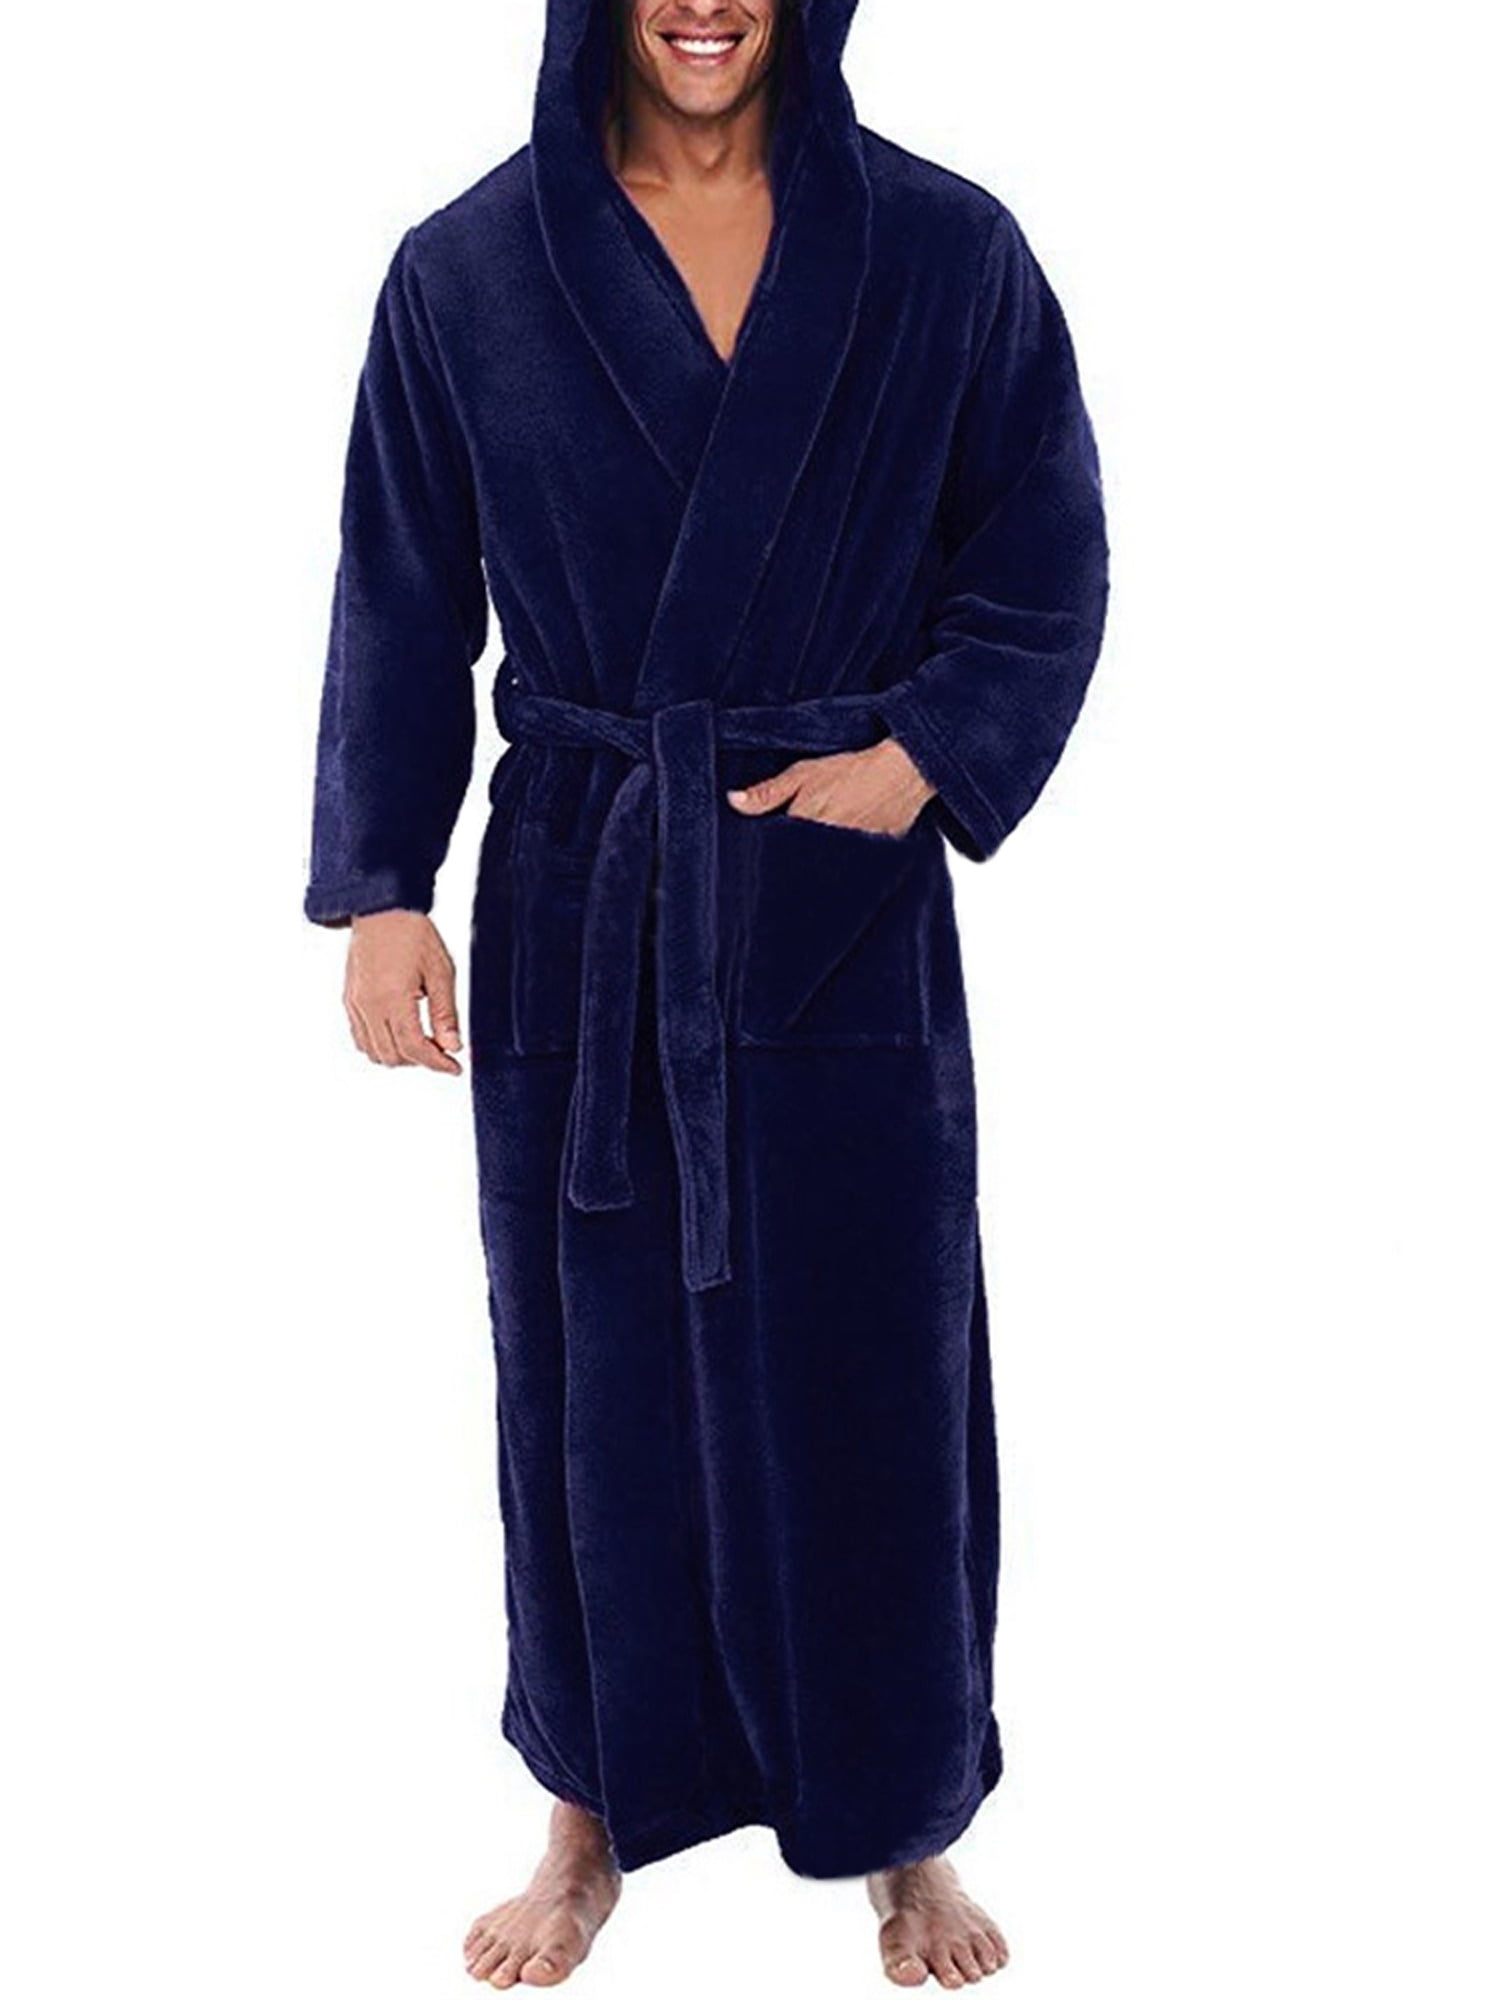 Mens Hooded Robe Full Length Long Plush Shawl Kimono Bathrobe Warm Soft Home Clothes with Belt Nightwear Sleepwear